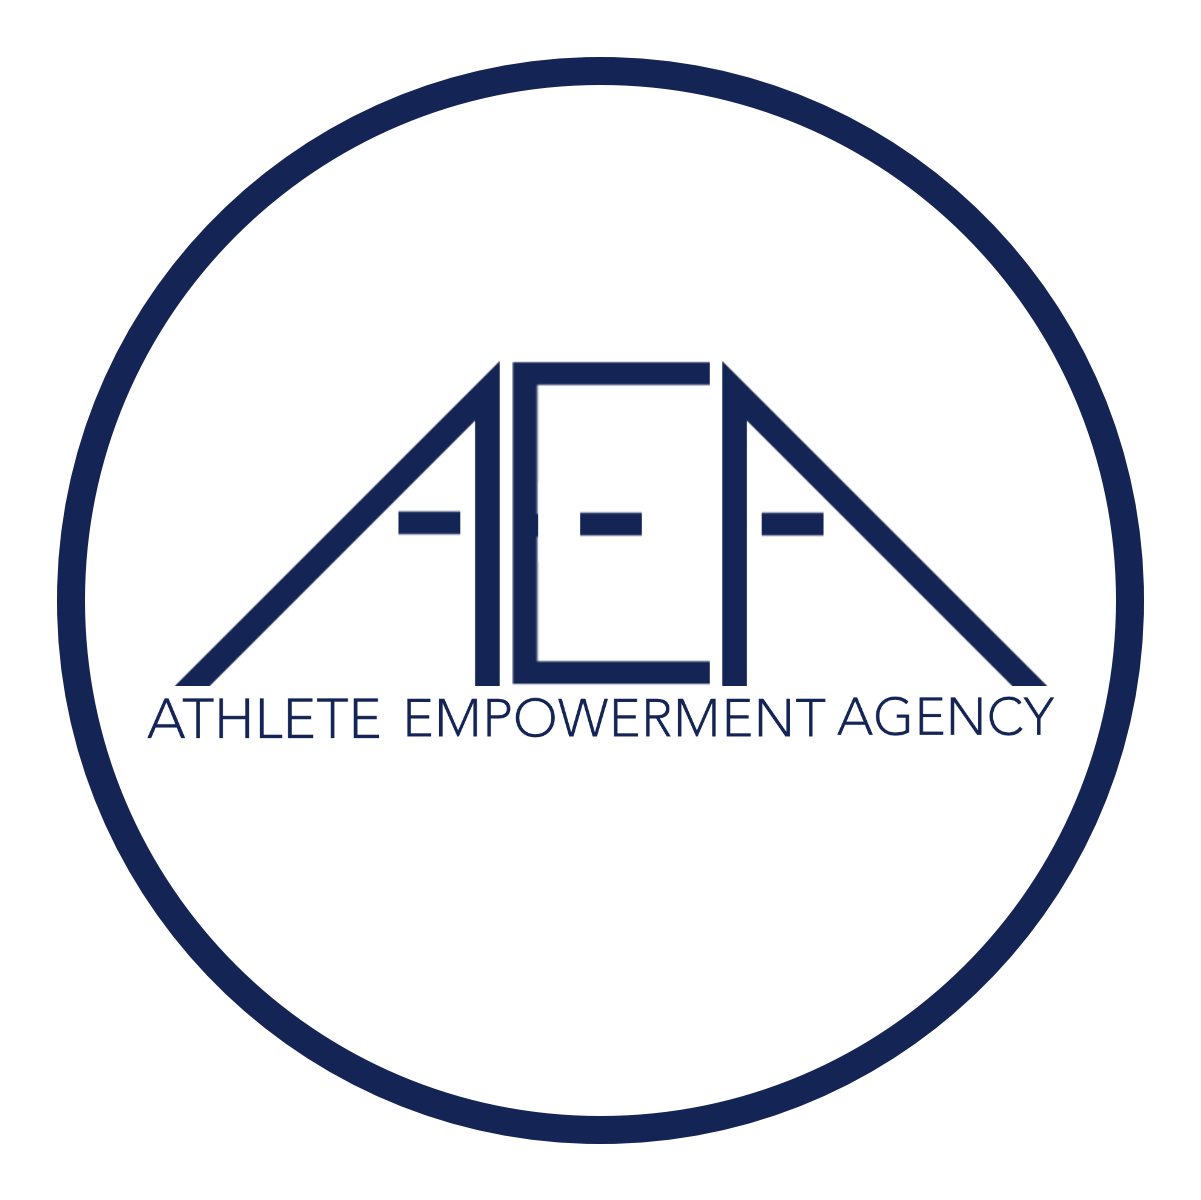 AEA - Athlete Empowerment Agency